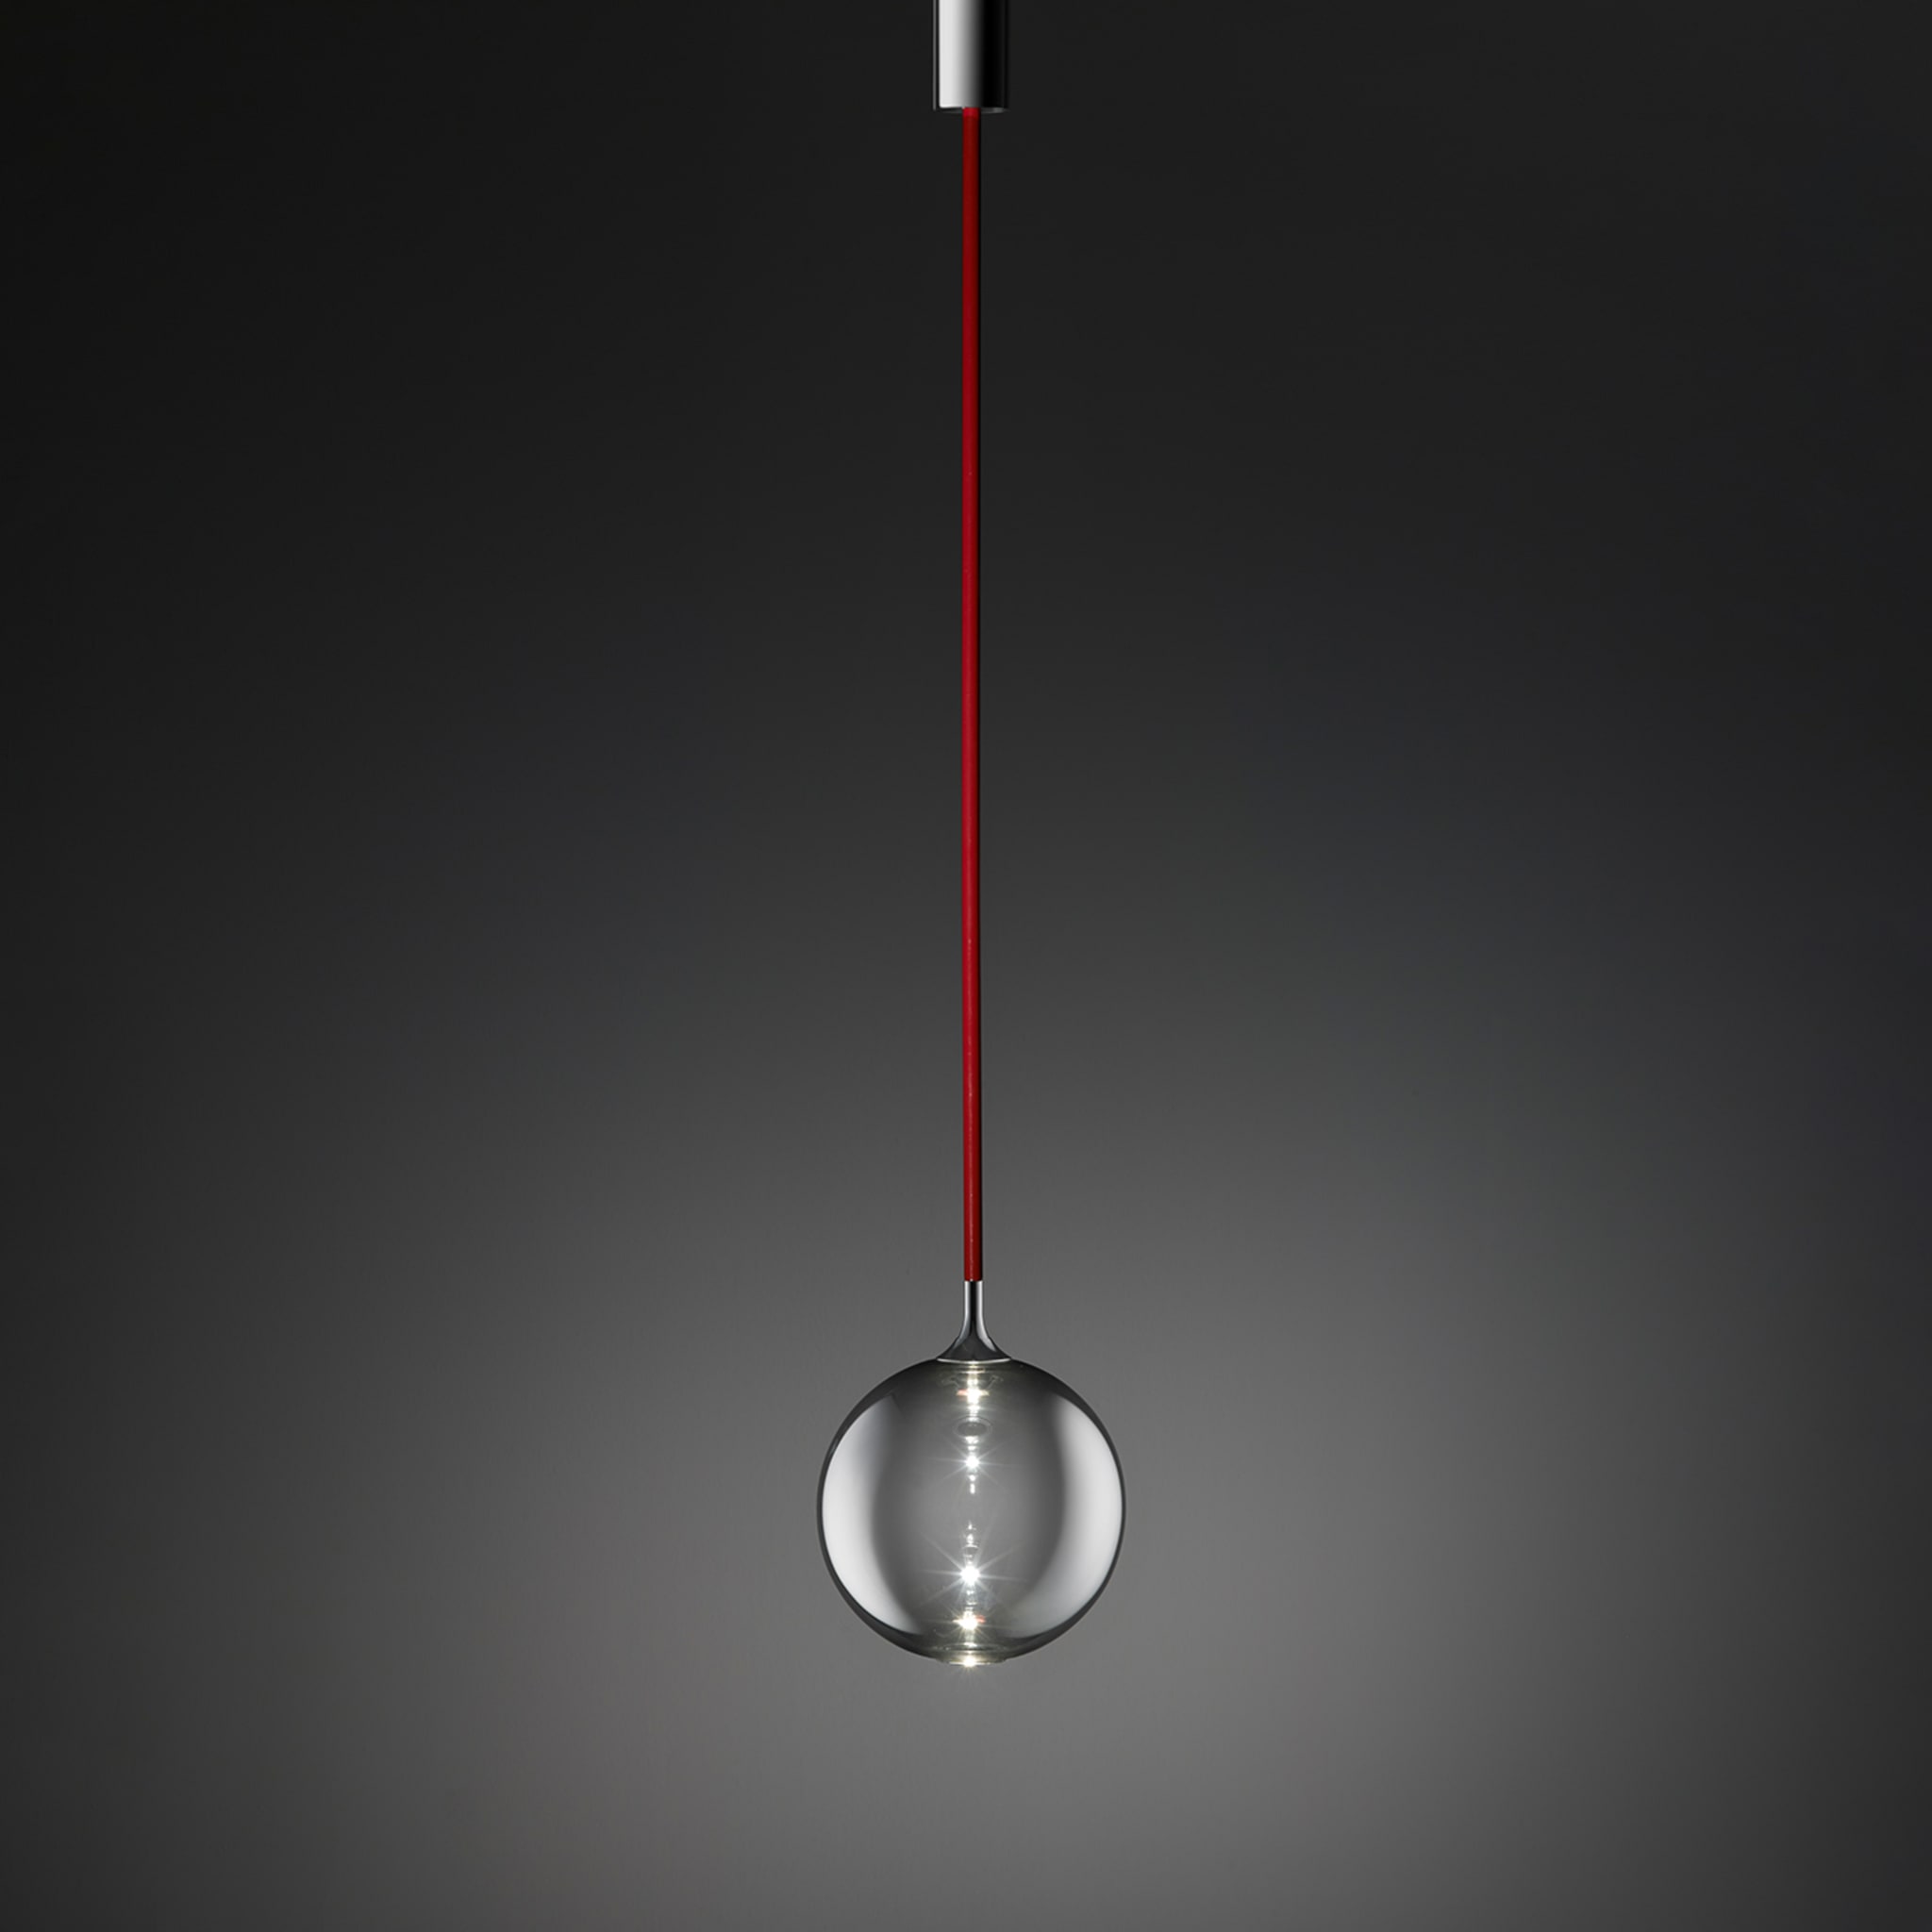 Lampe suspendue rouge Palloncino par Franco Raggi - Vue alternative 1